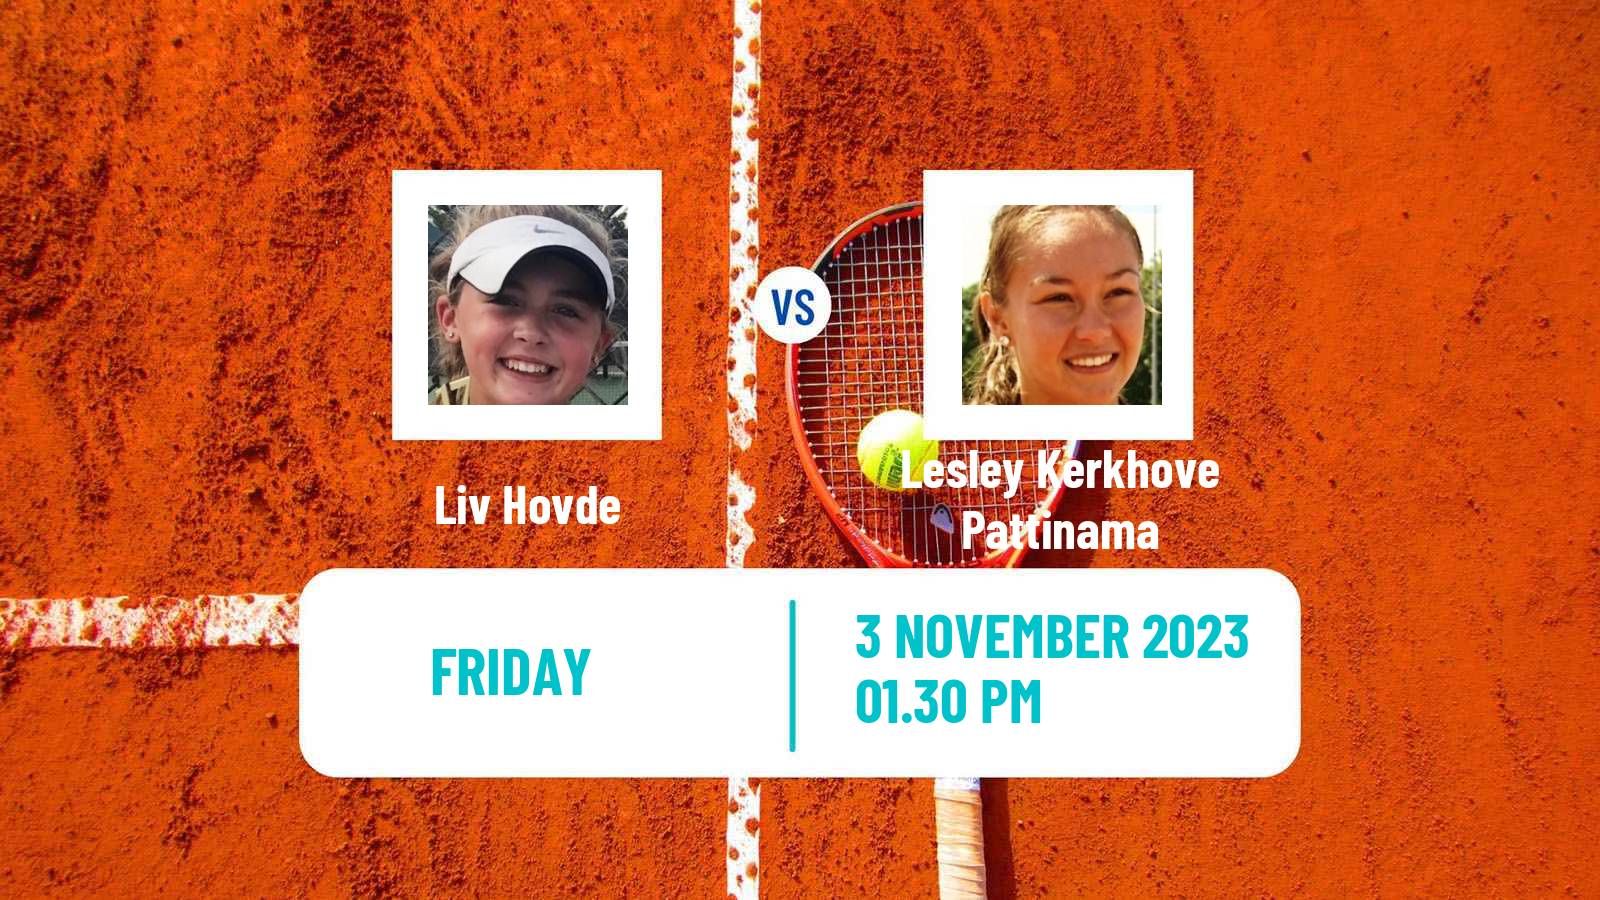 Tennis ITF W25 Edmonton Women Liv Hovde - Lesley Kerkhove Pattinama